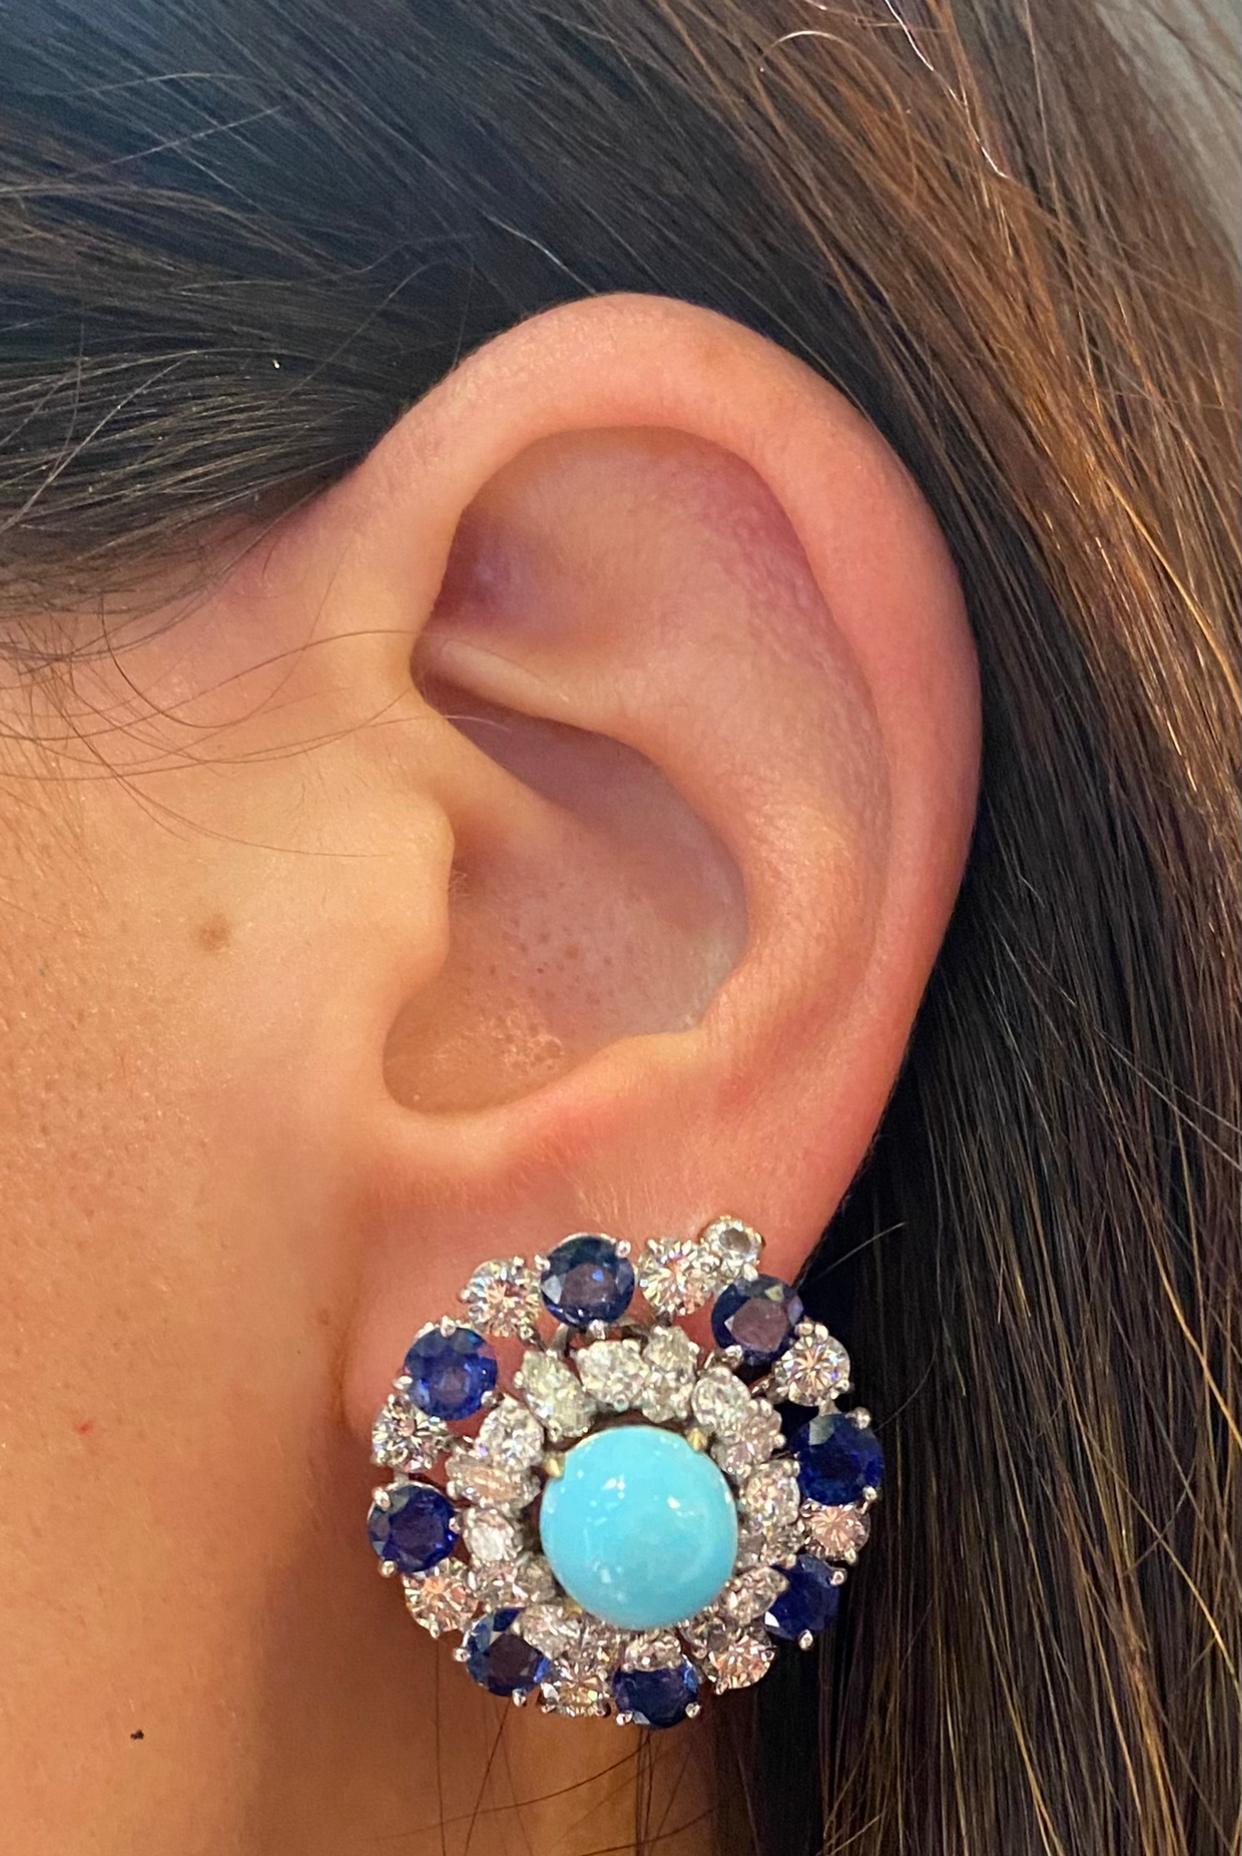 Bulgari Turquoise Sapphire and Diamond Earrings

Pair of Bulgari earrings featuring a center cabochon turquoise surrounded by sapphires and diamonds. 

Approximate Diameter: 1